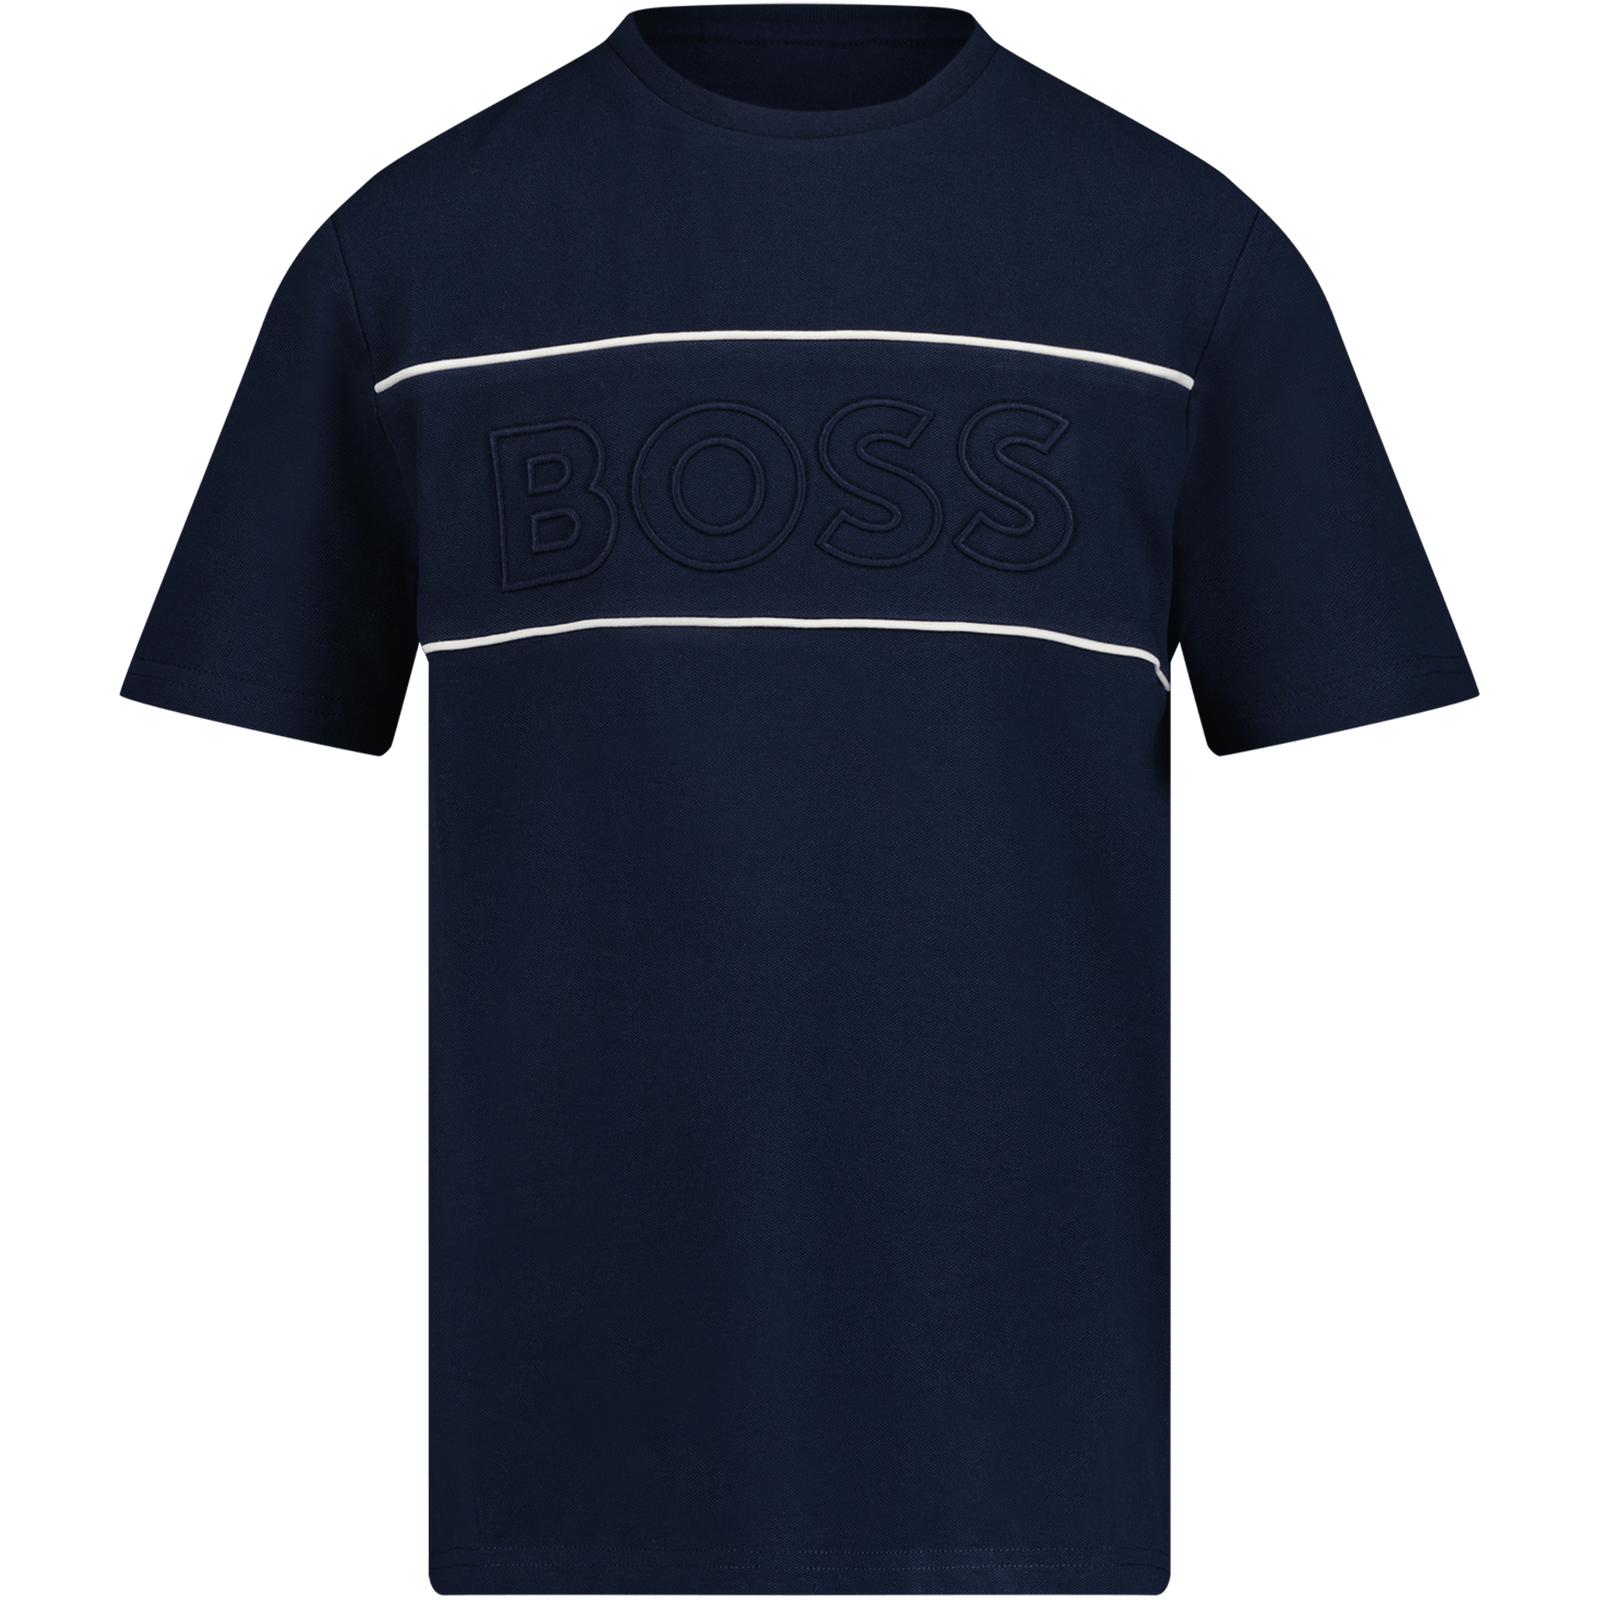 Boss Kinder Jongens T-Shirt Navy 4Y